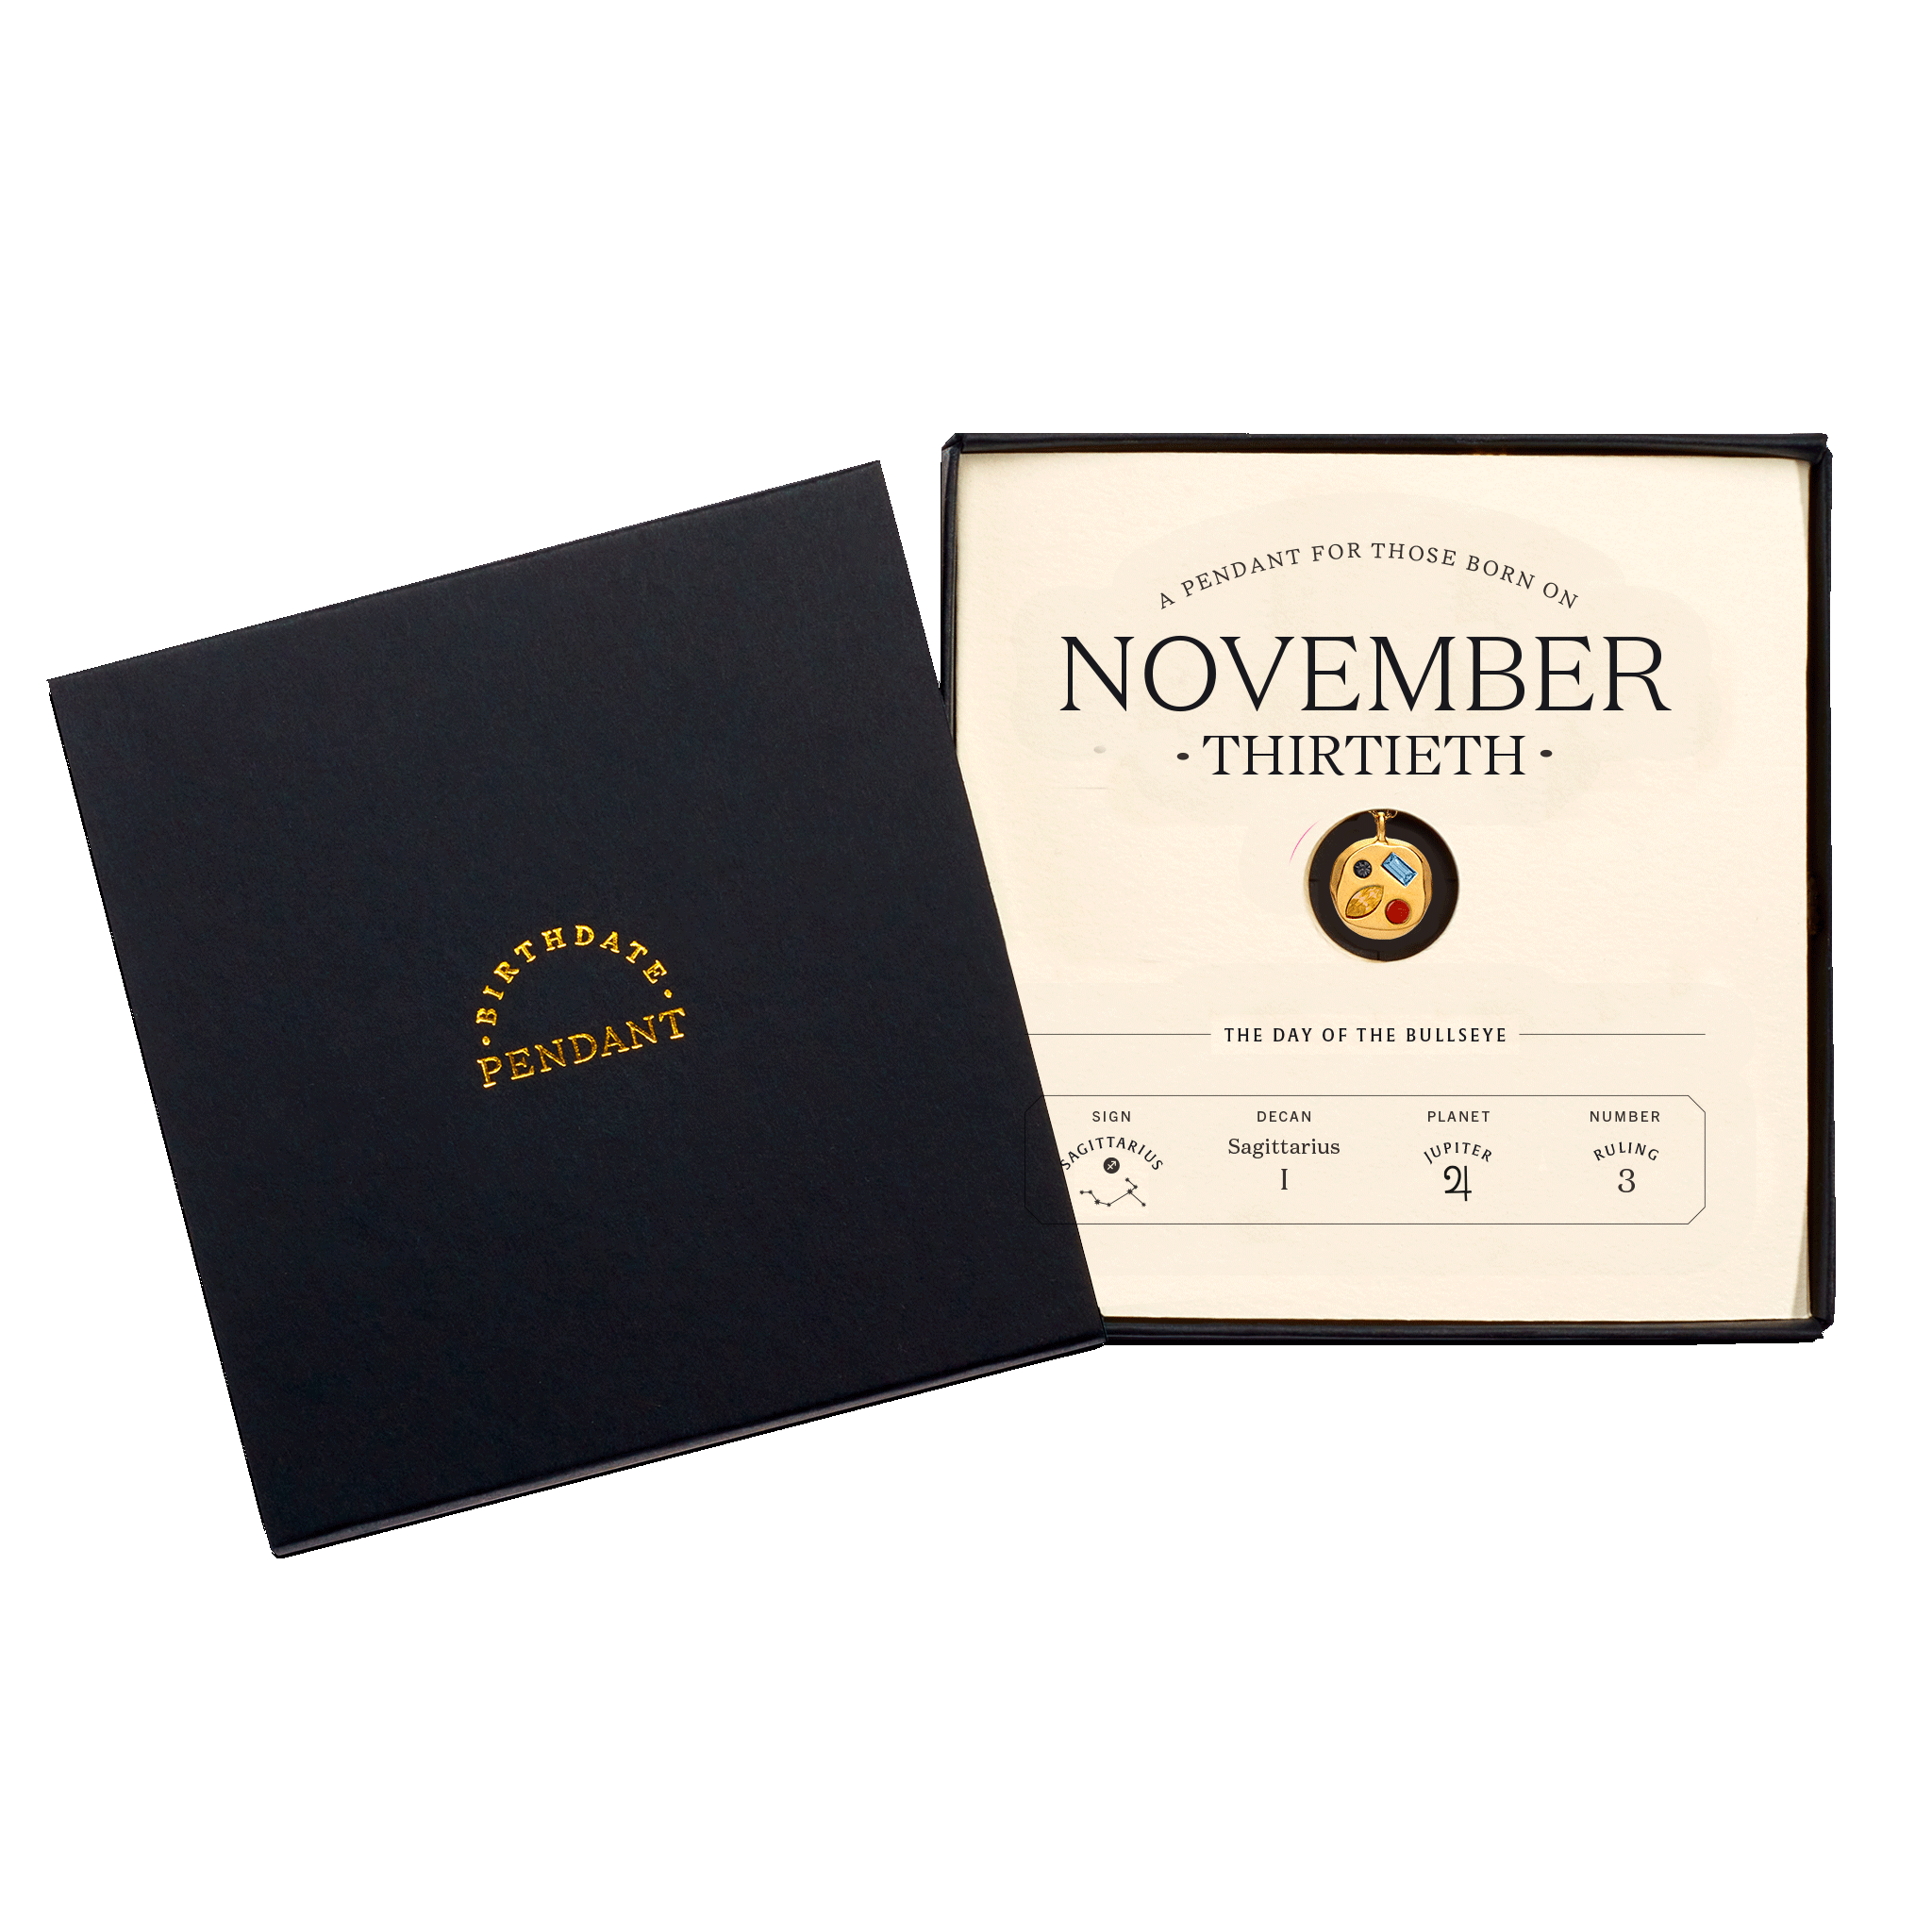 The November Thirtieth Pendant inside its box